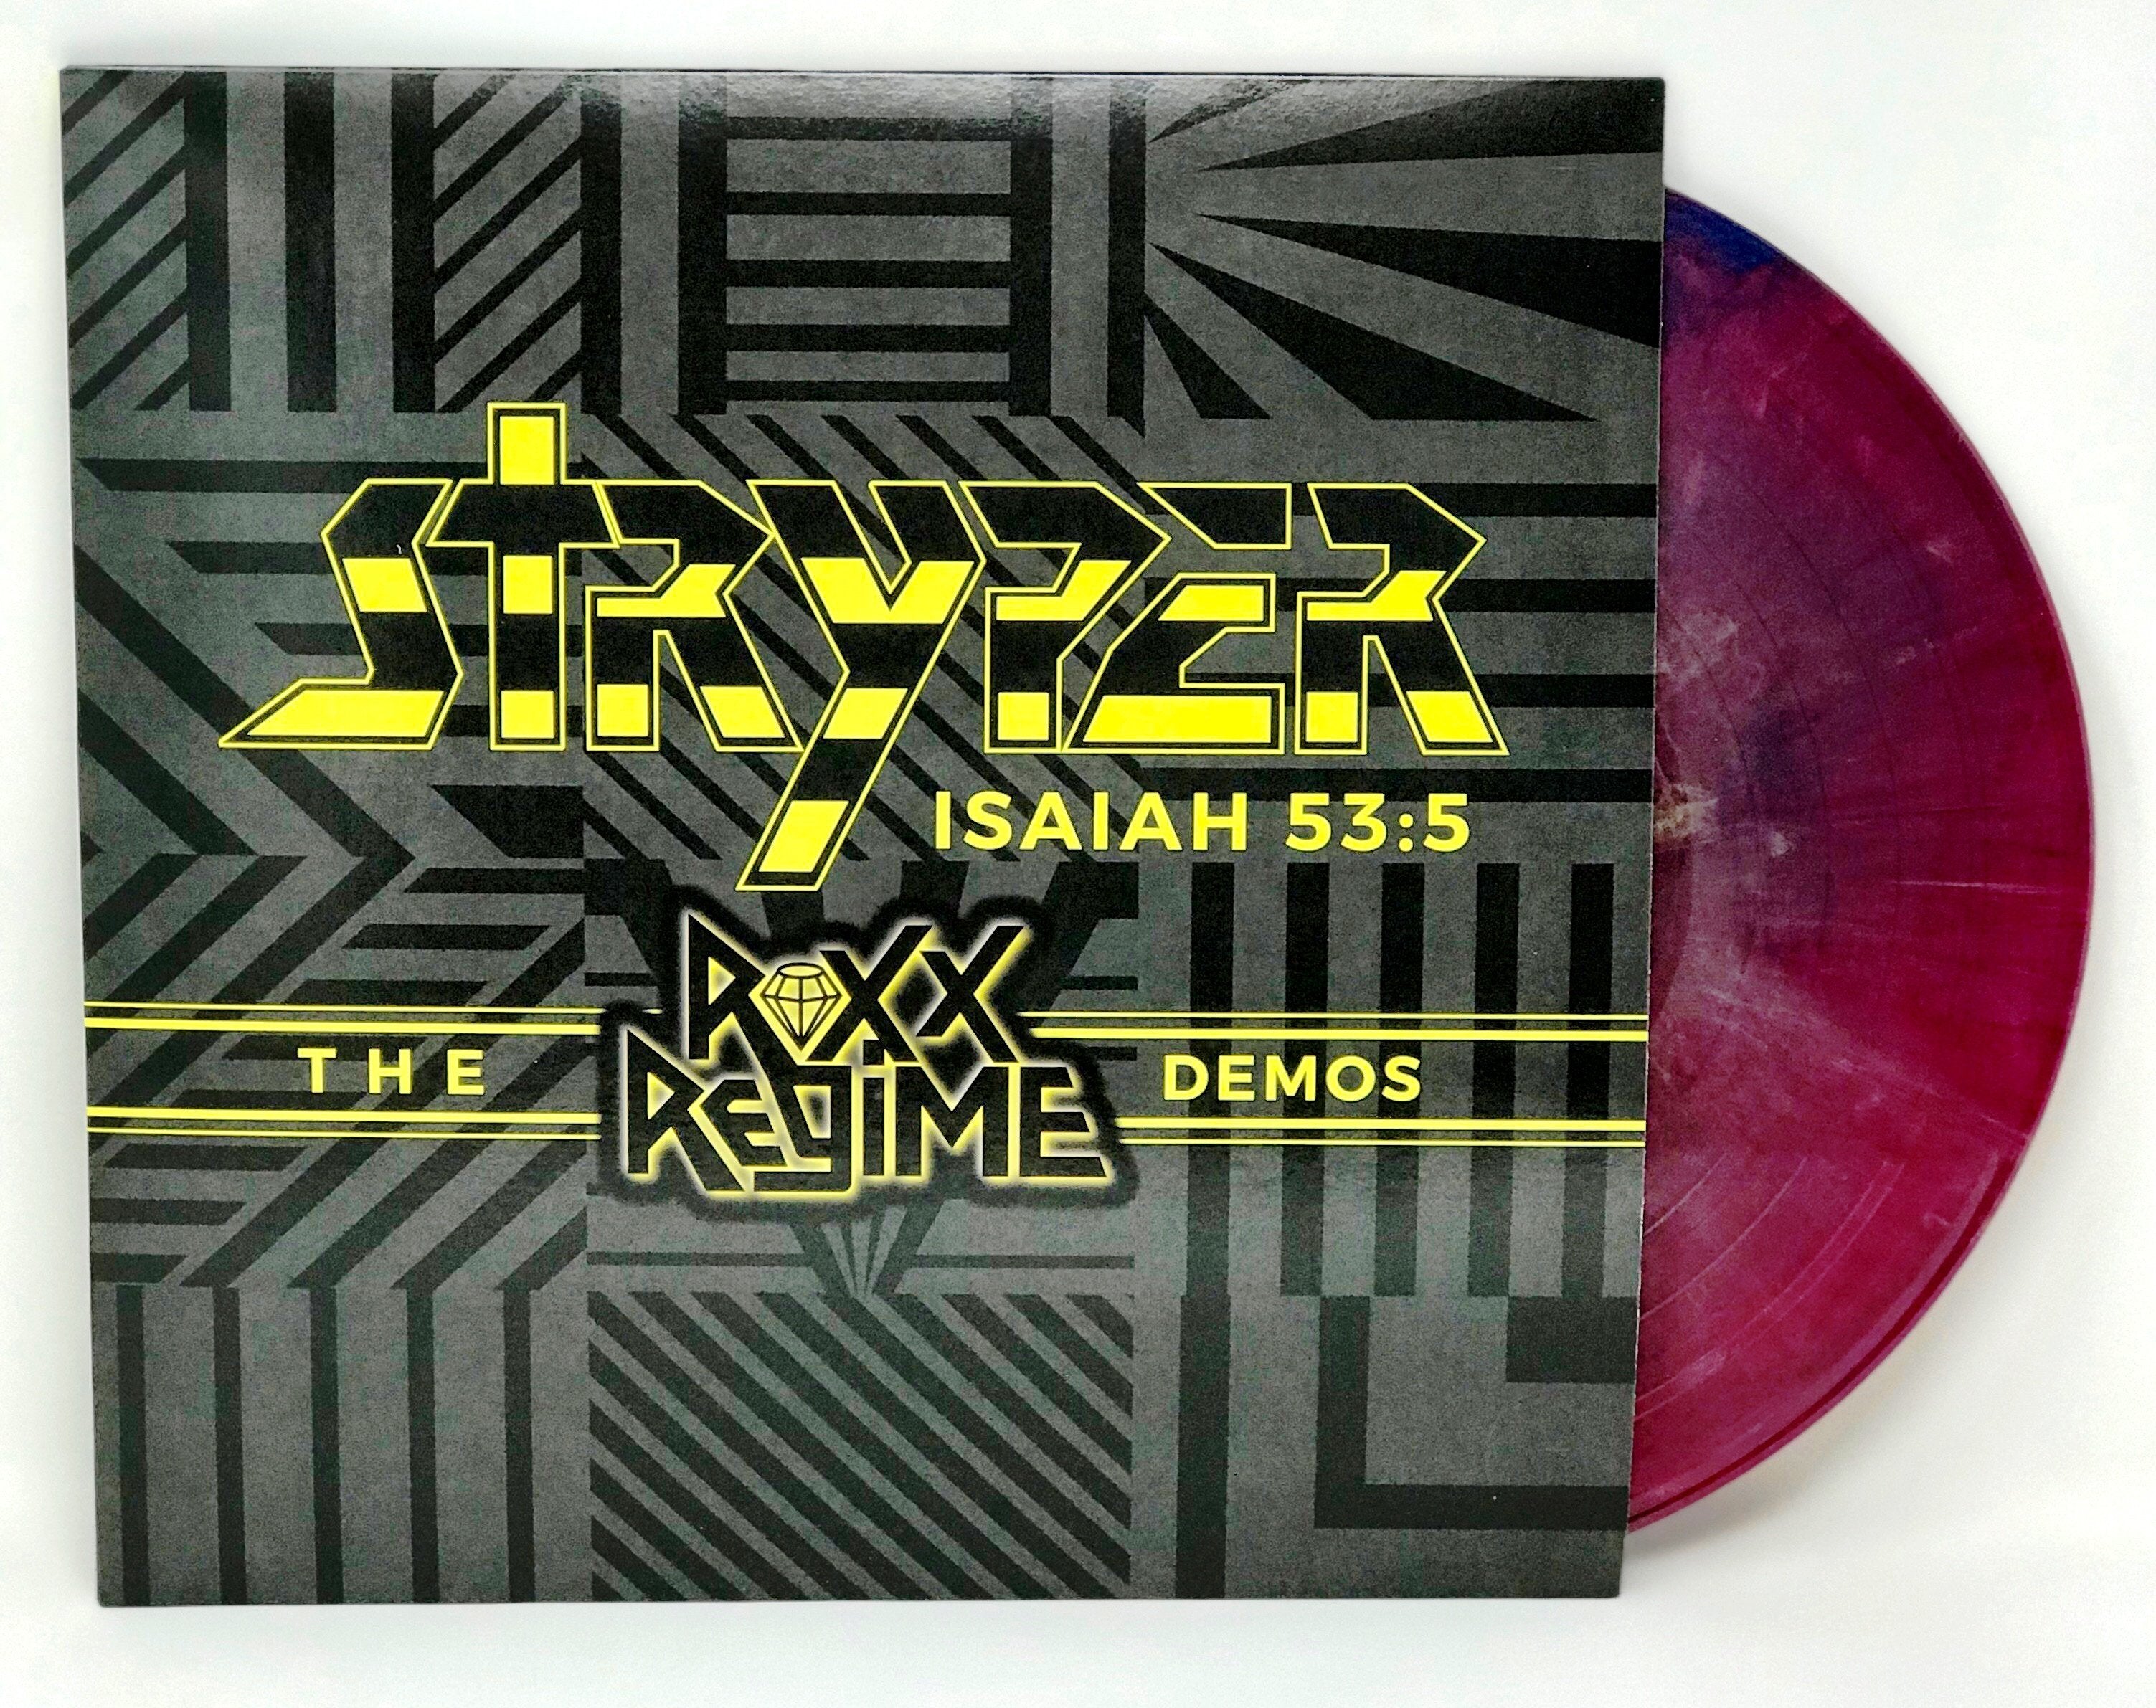 Stryper - The Roxx Regime Demos (Ltd. Ed. Color Vinyl) - Blind Tiger Record Club